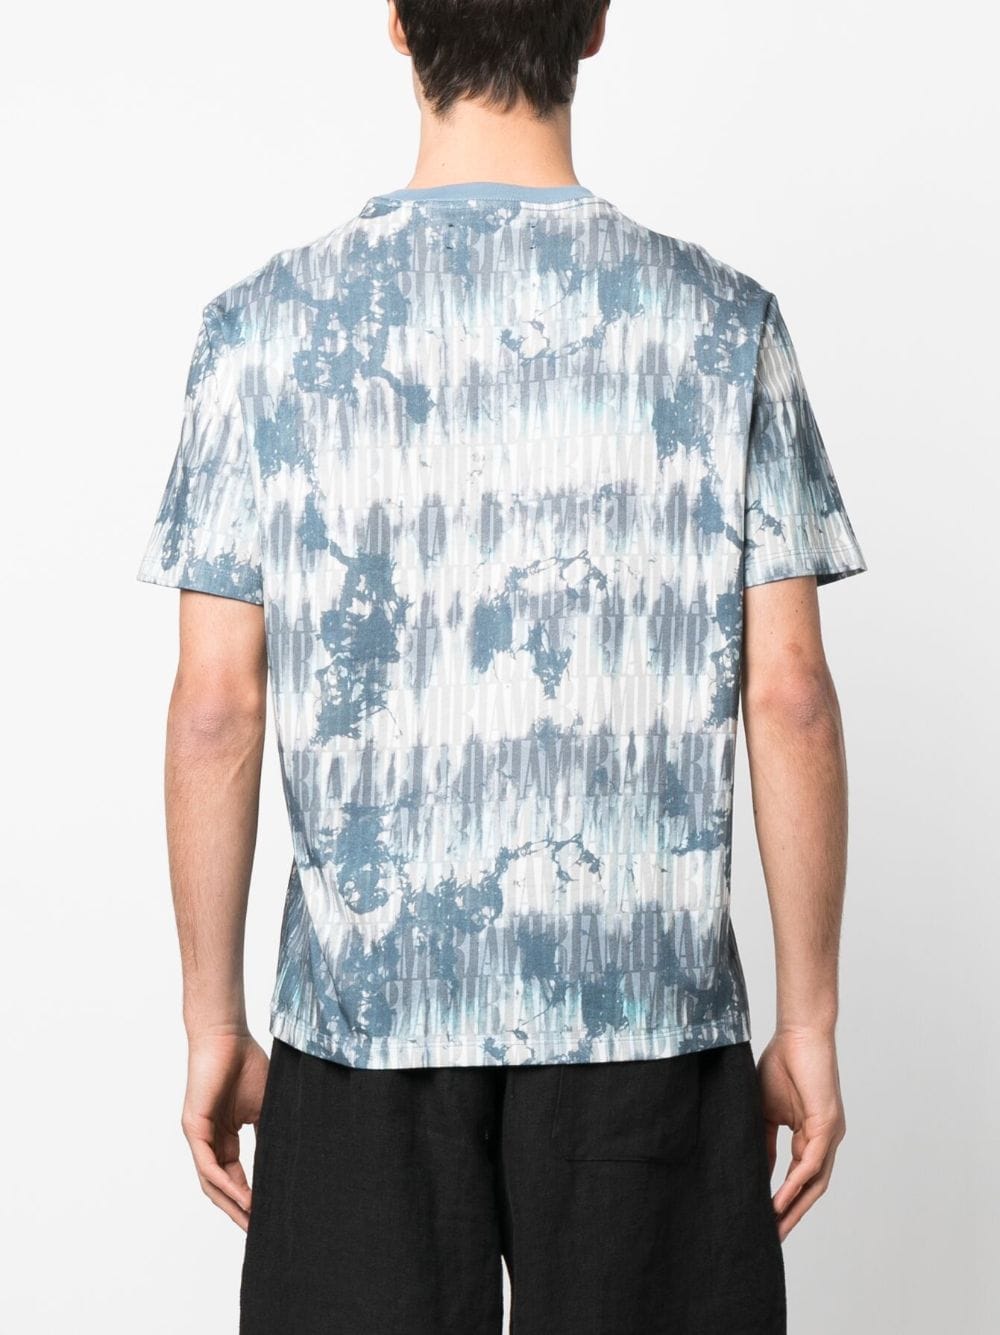 Printed Shibori Tie-Dye T-Shirt - Luxury Grey